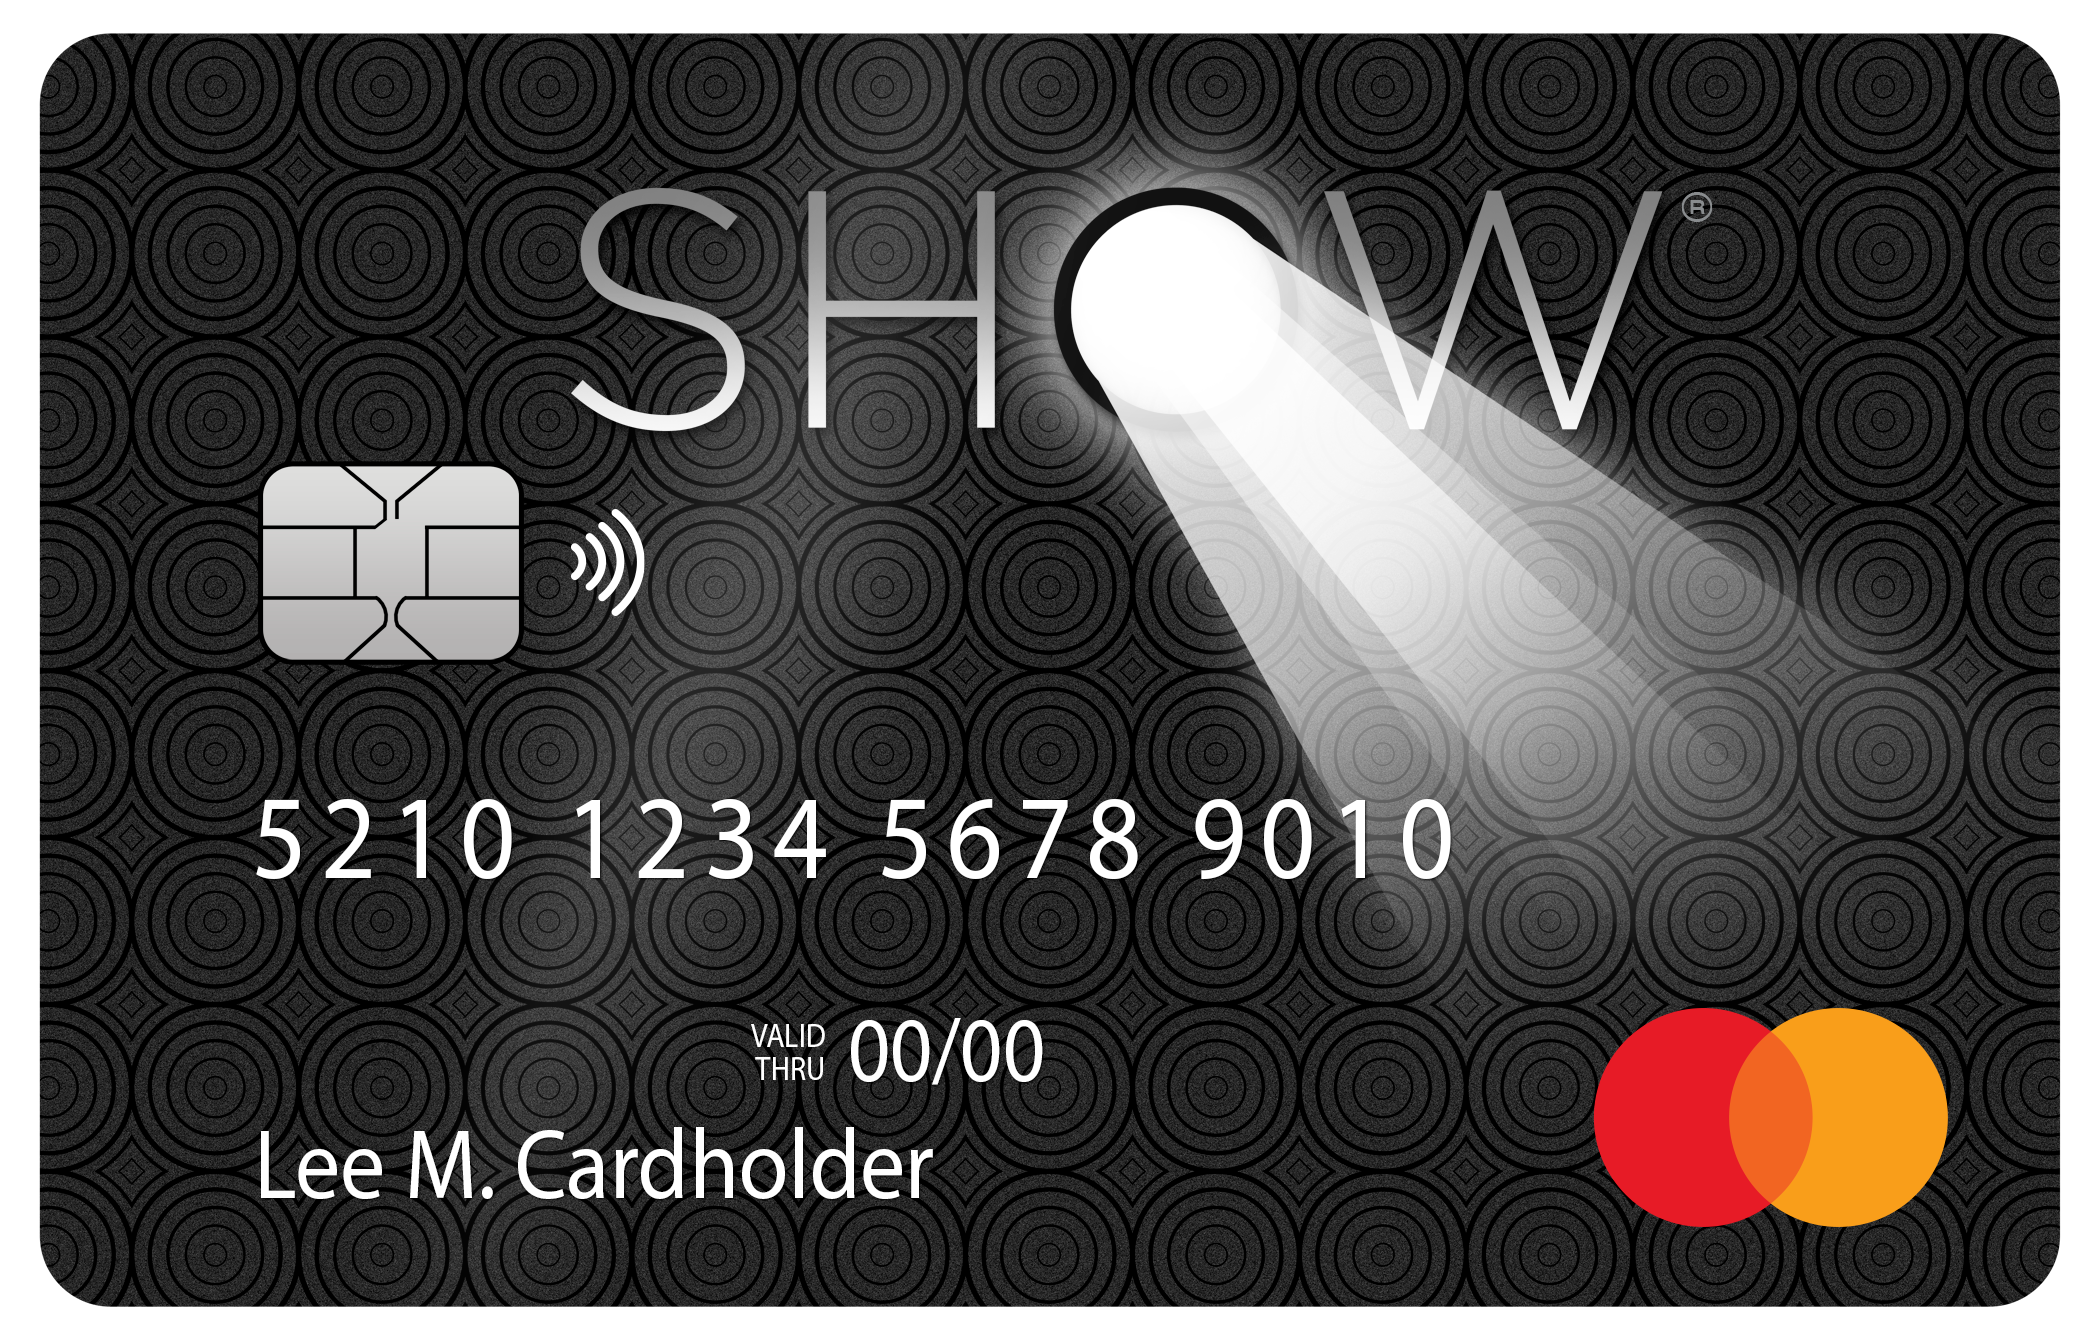 SHOW Credit card